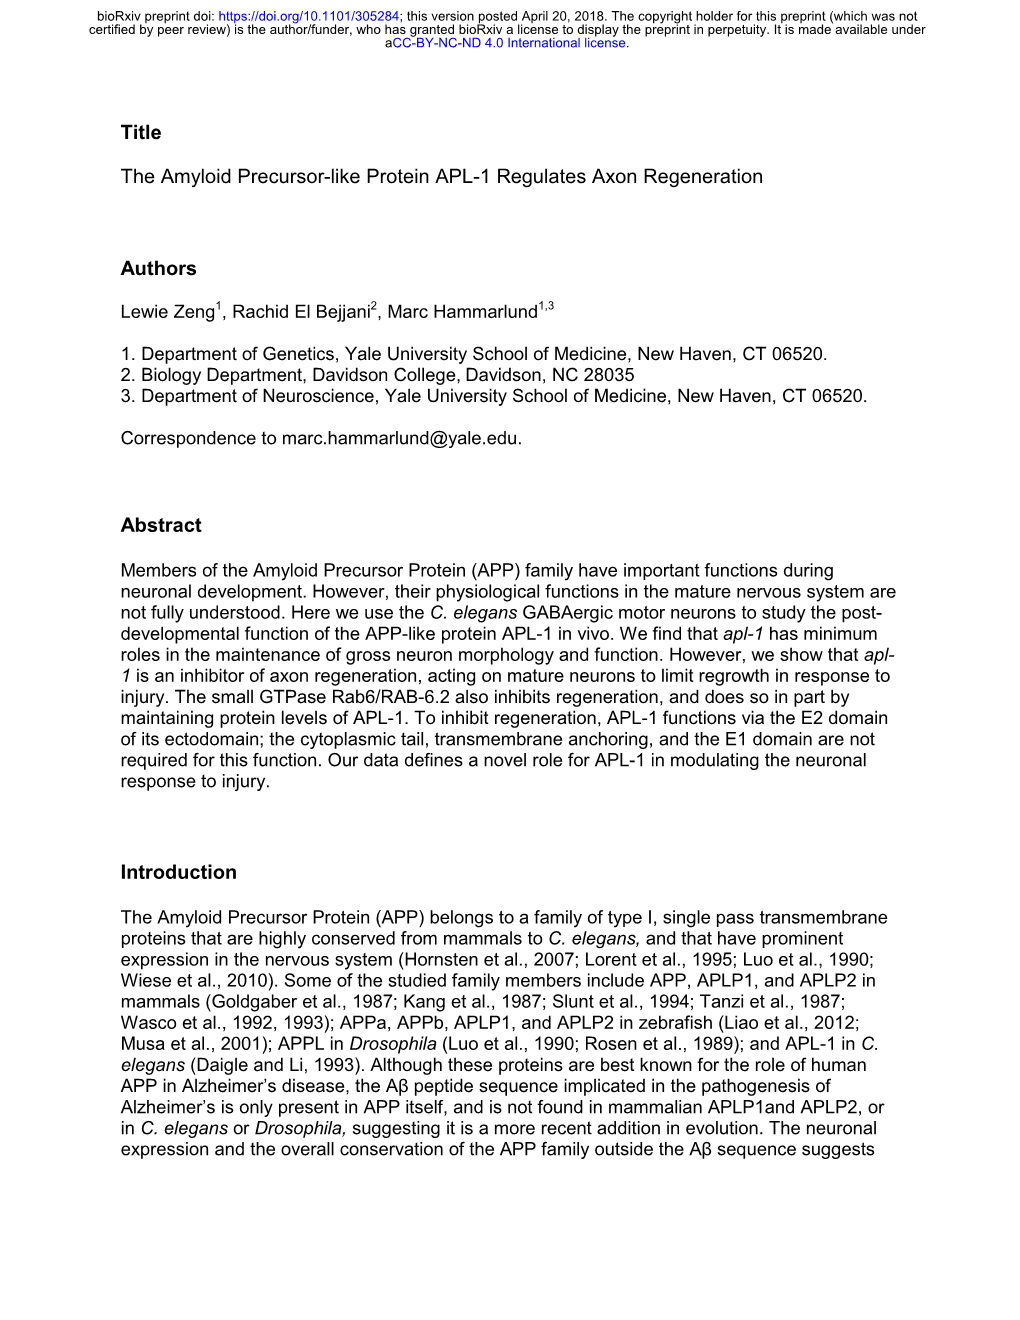 The Amyloid Precursor-Like Protein APL-1 Regulates Axon Regeneration